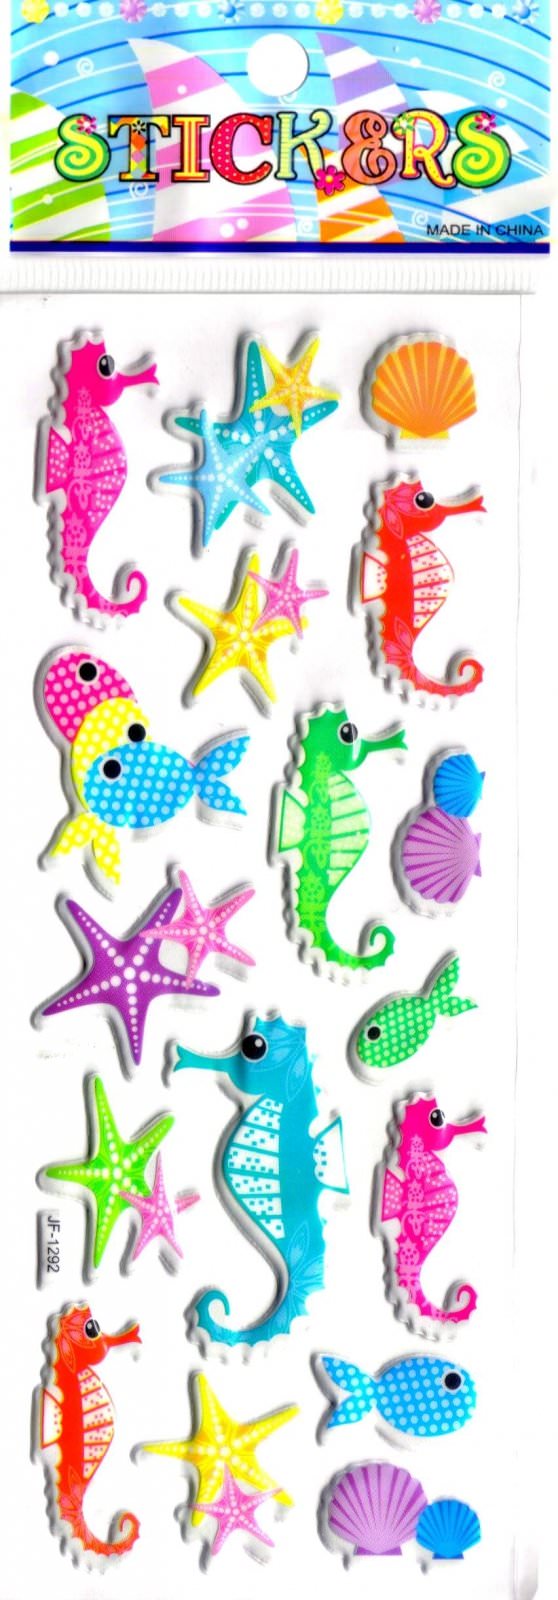 ocean hippocampe etoile coquillage poisson gommette sticker adhesif enfant decoration JF 1292 emb